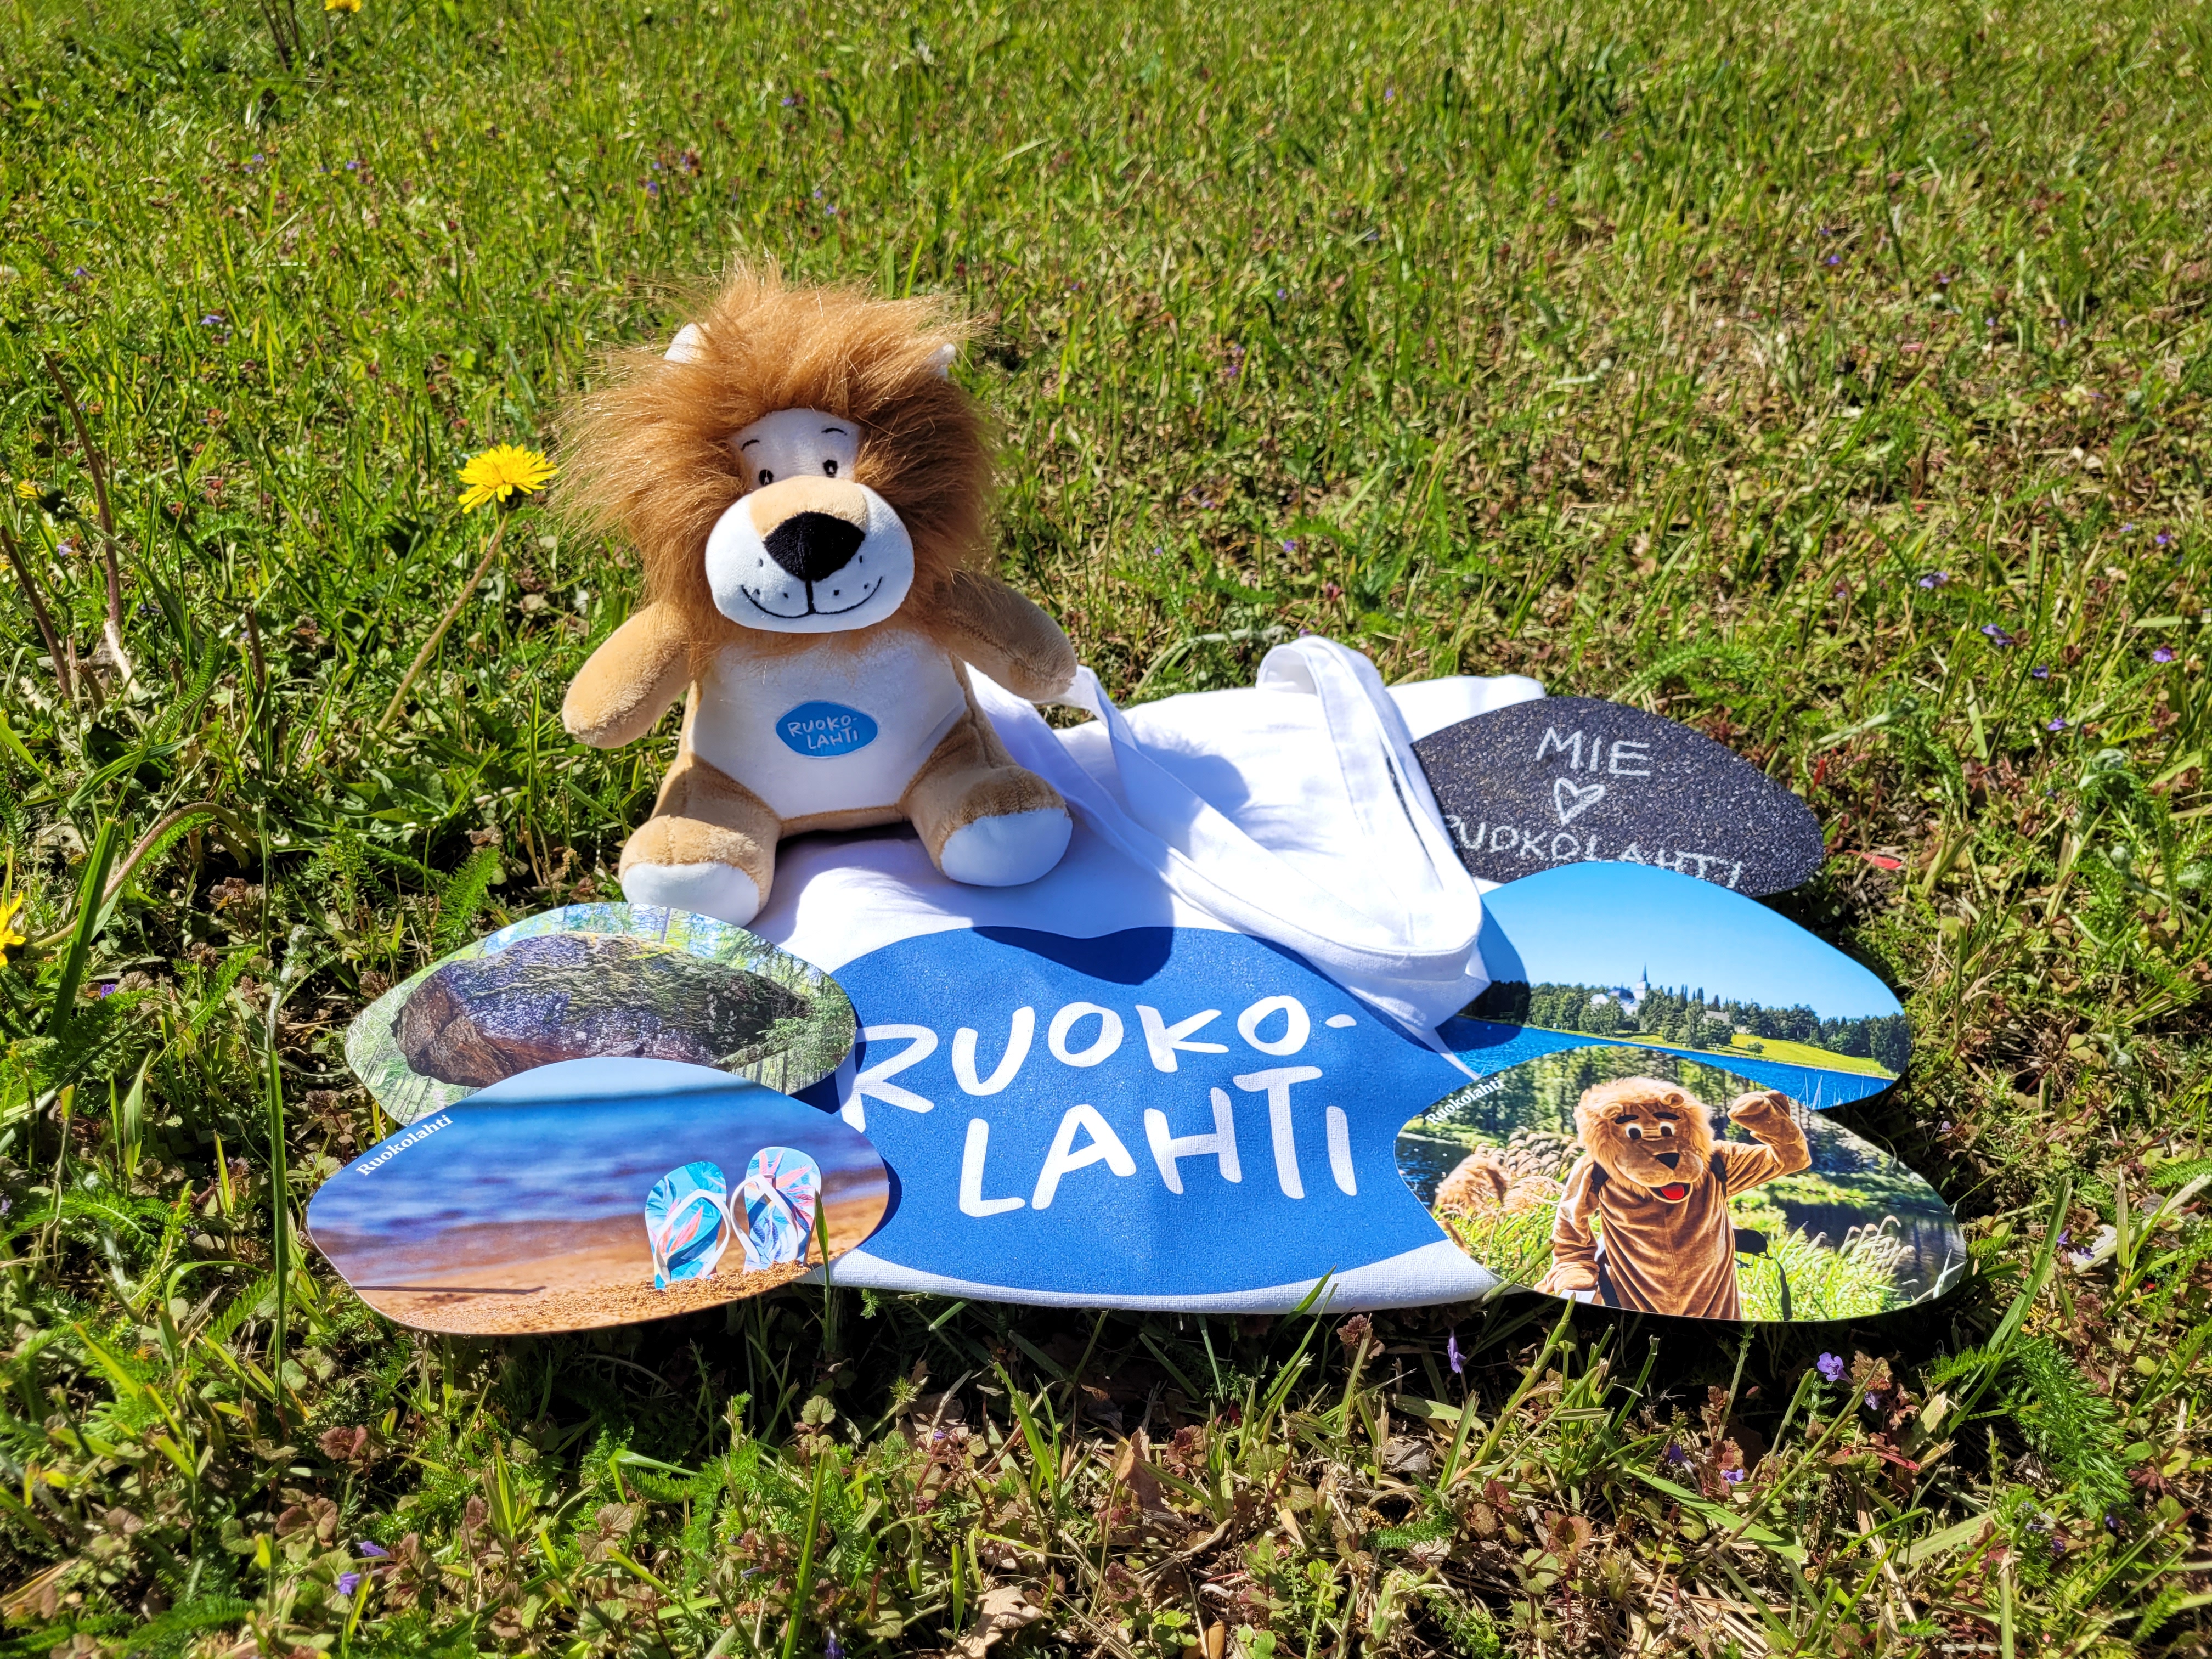 Ruokolahti mini lion, postcards and bag